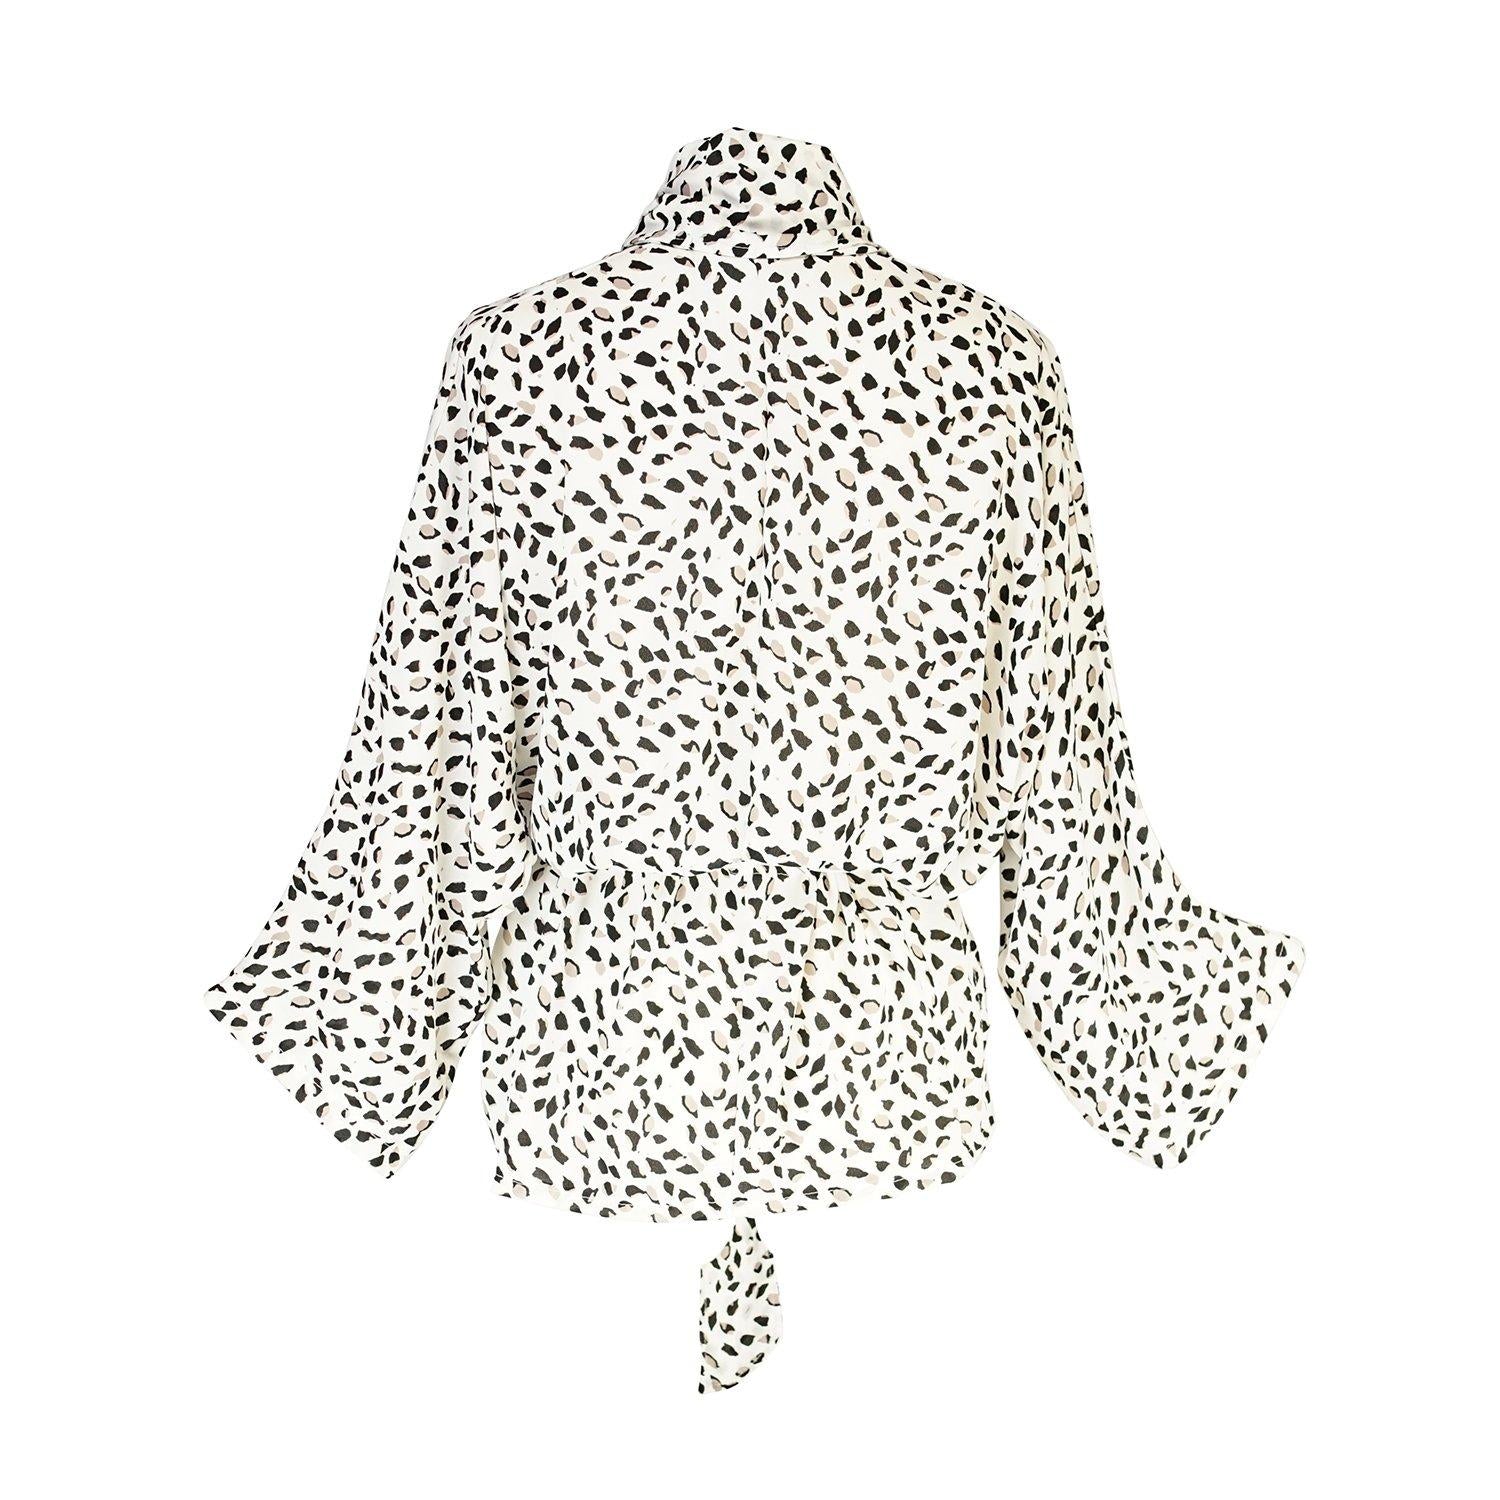 jennafer grace dolman wrap kimono top semi sheer snow leopard animal print ivory white black dots blouse shirt rocker chic glam rock cocktail party boho bohemian unisex handmade